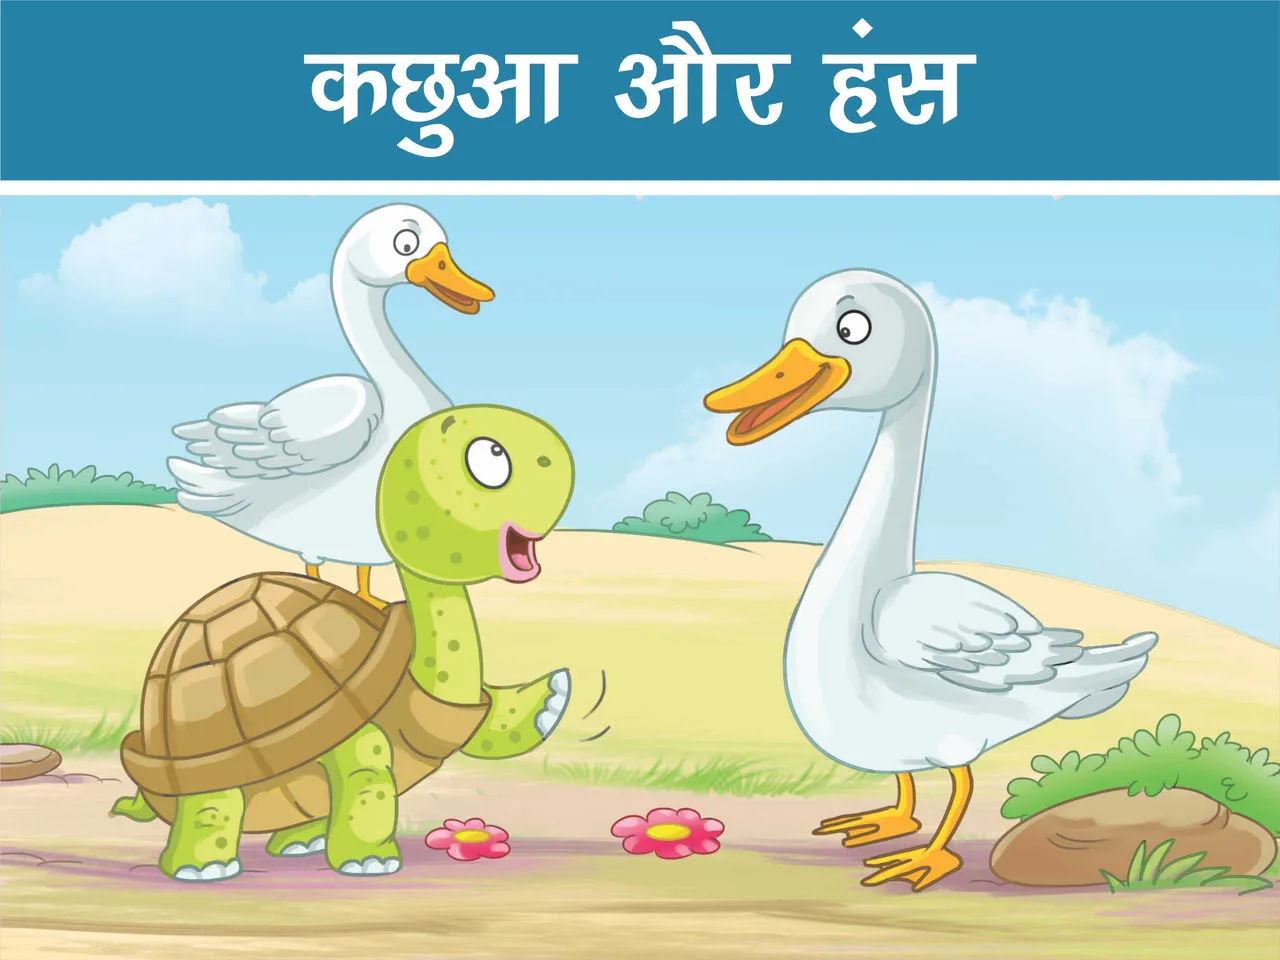 Tortoise and Swan cartoon image